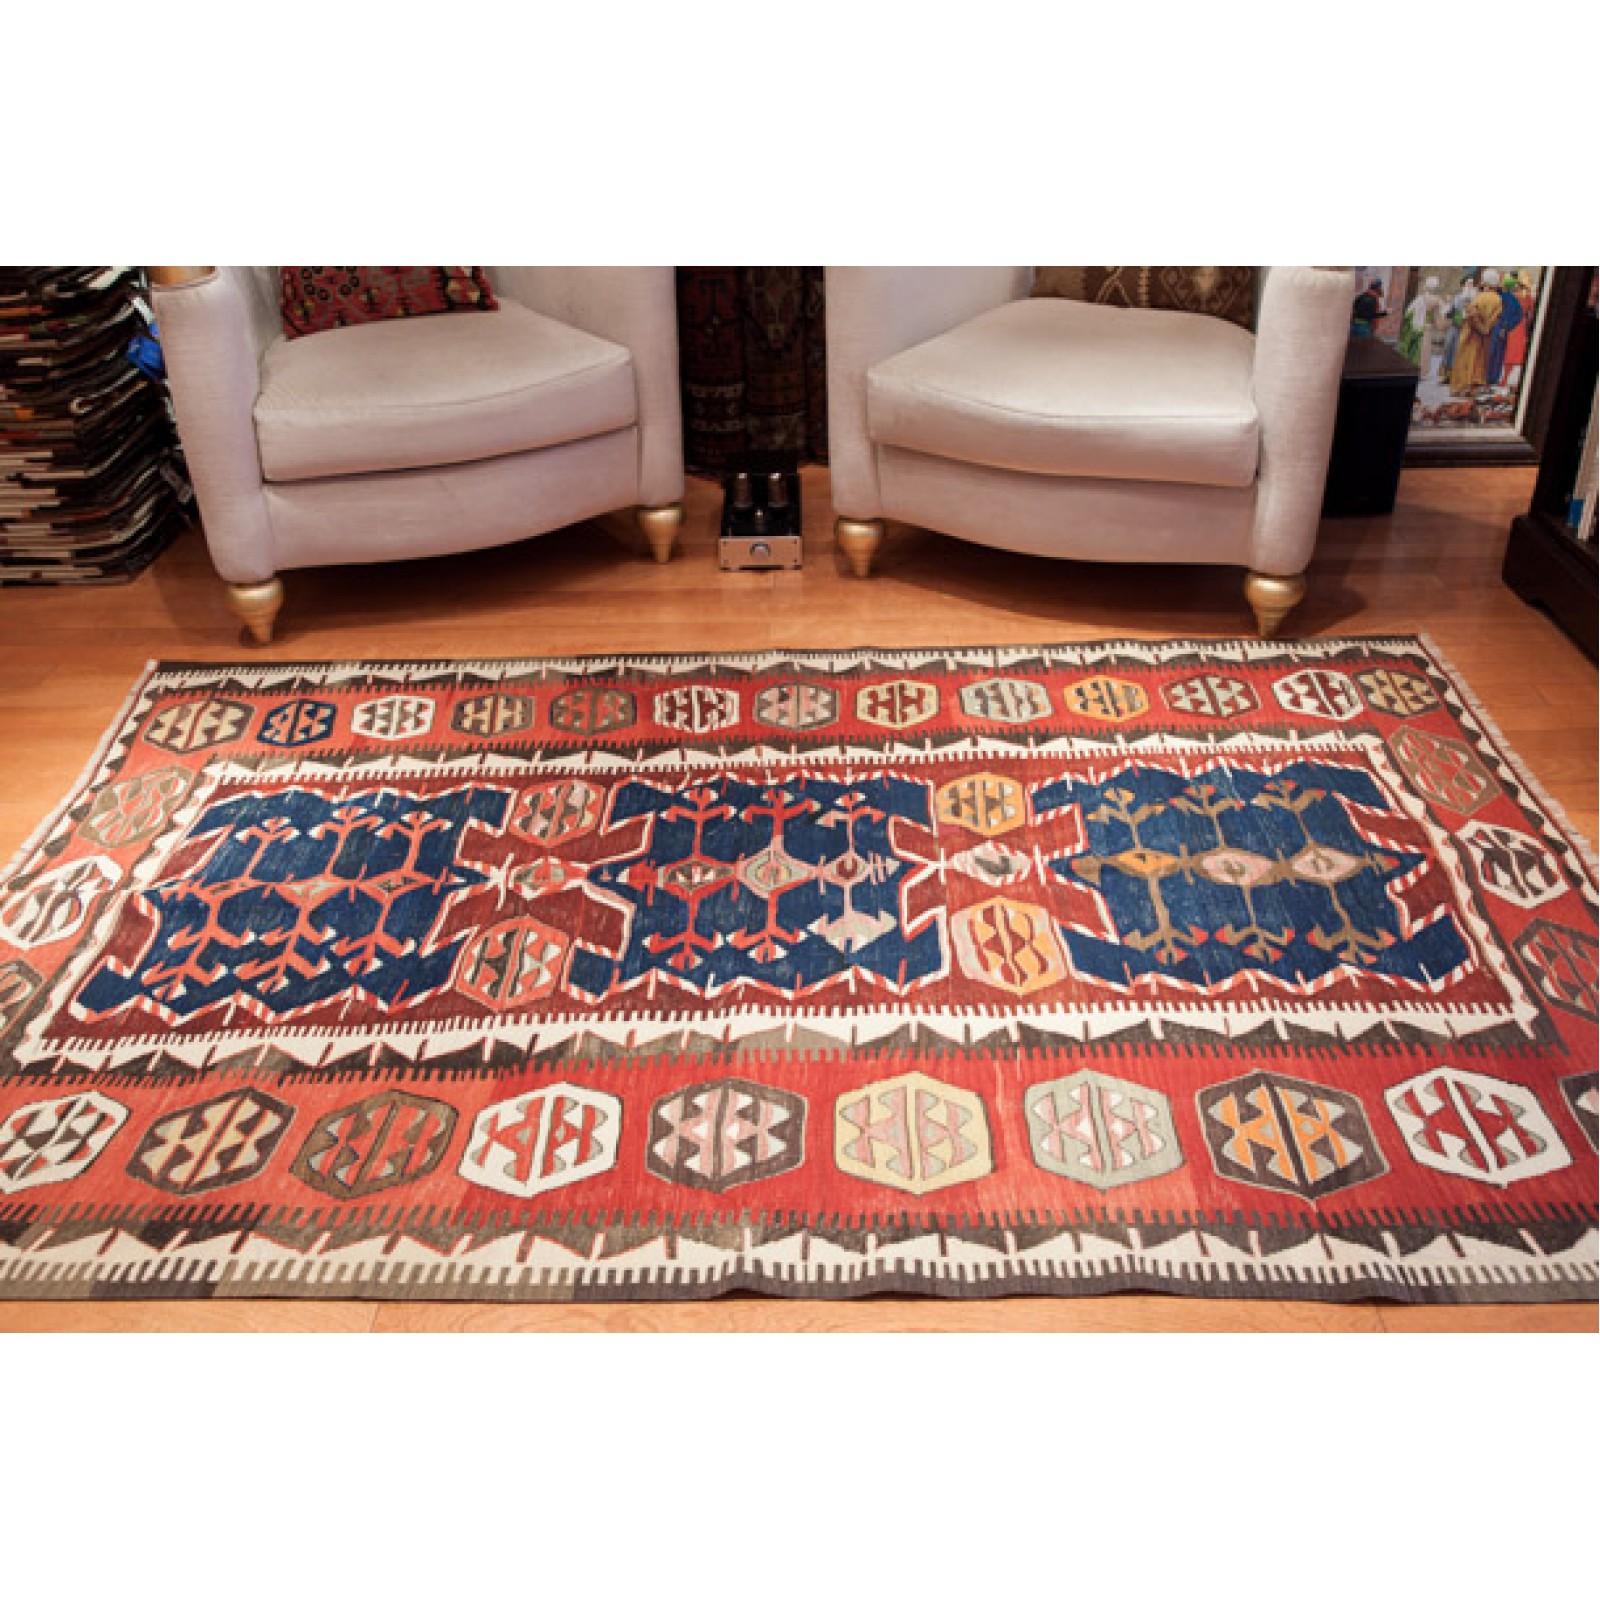 20th Century Antique Konya Obruk Kilim Central Anatolian Rug Vintage Turkish Carpet For Sale